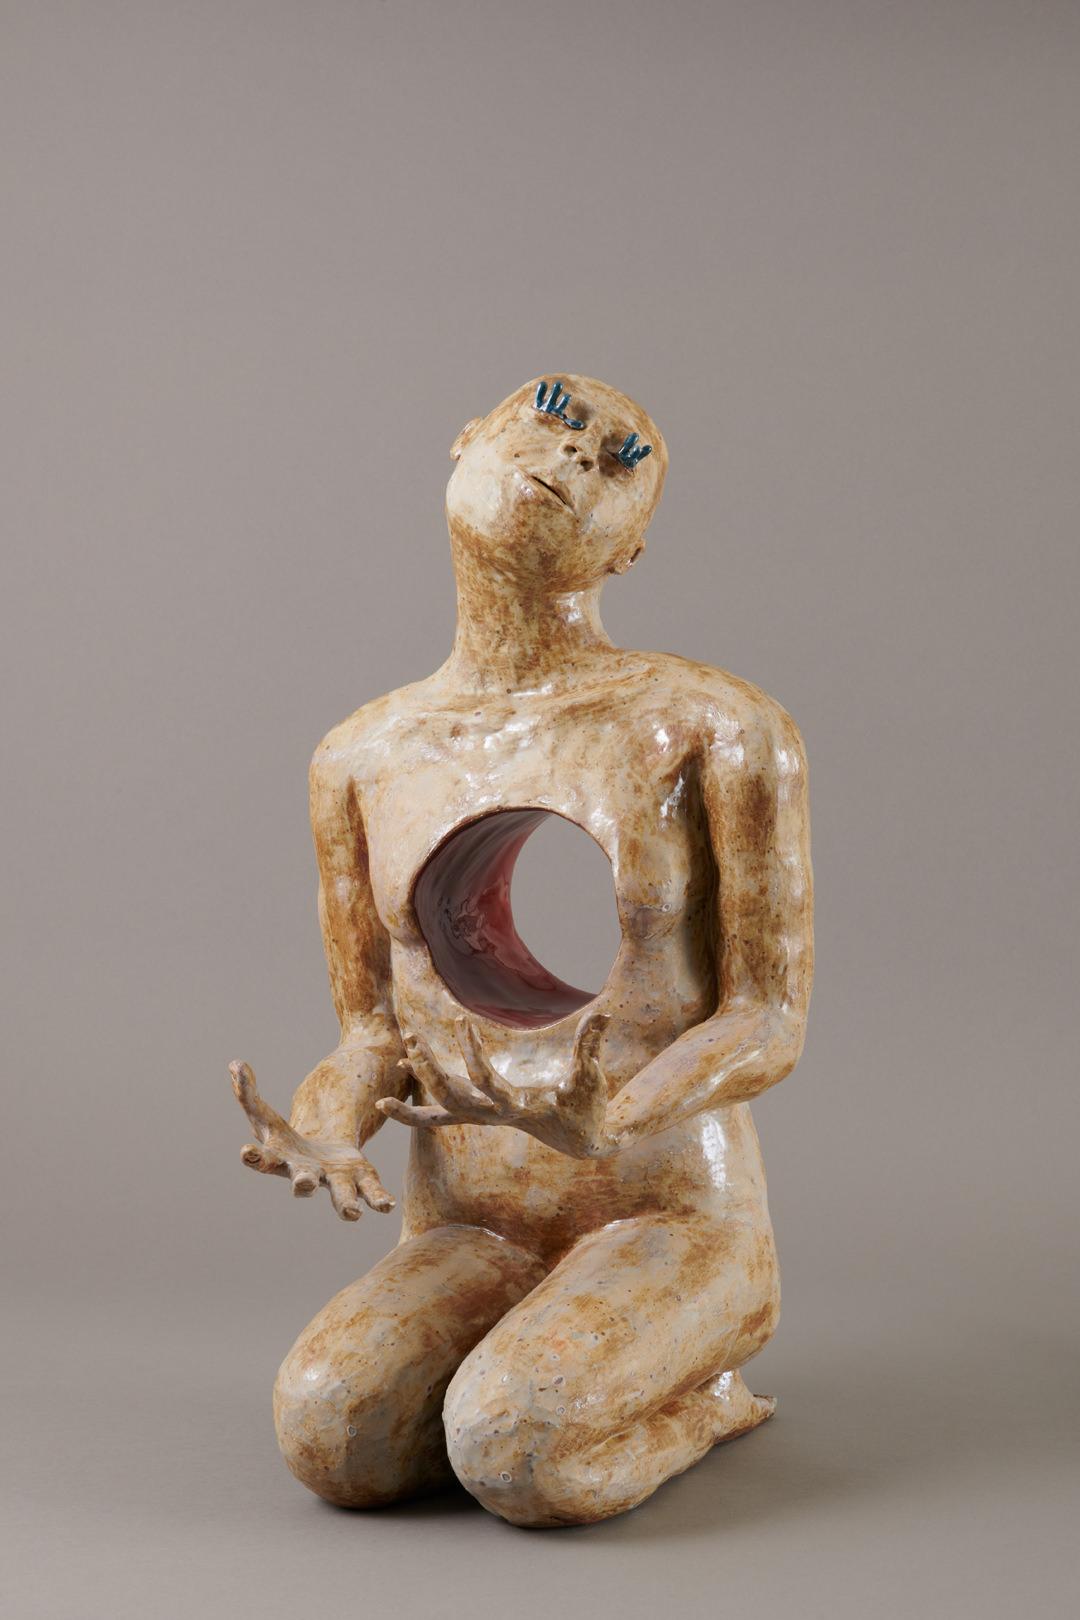 Temple, Escultura contemporánea de cerámica esmaltada del siglo XXI, Figura arrodillada